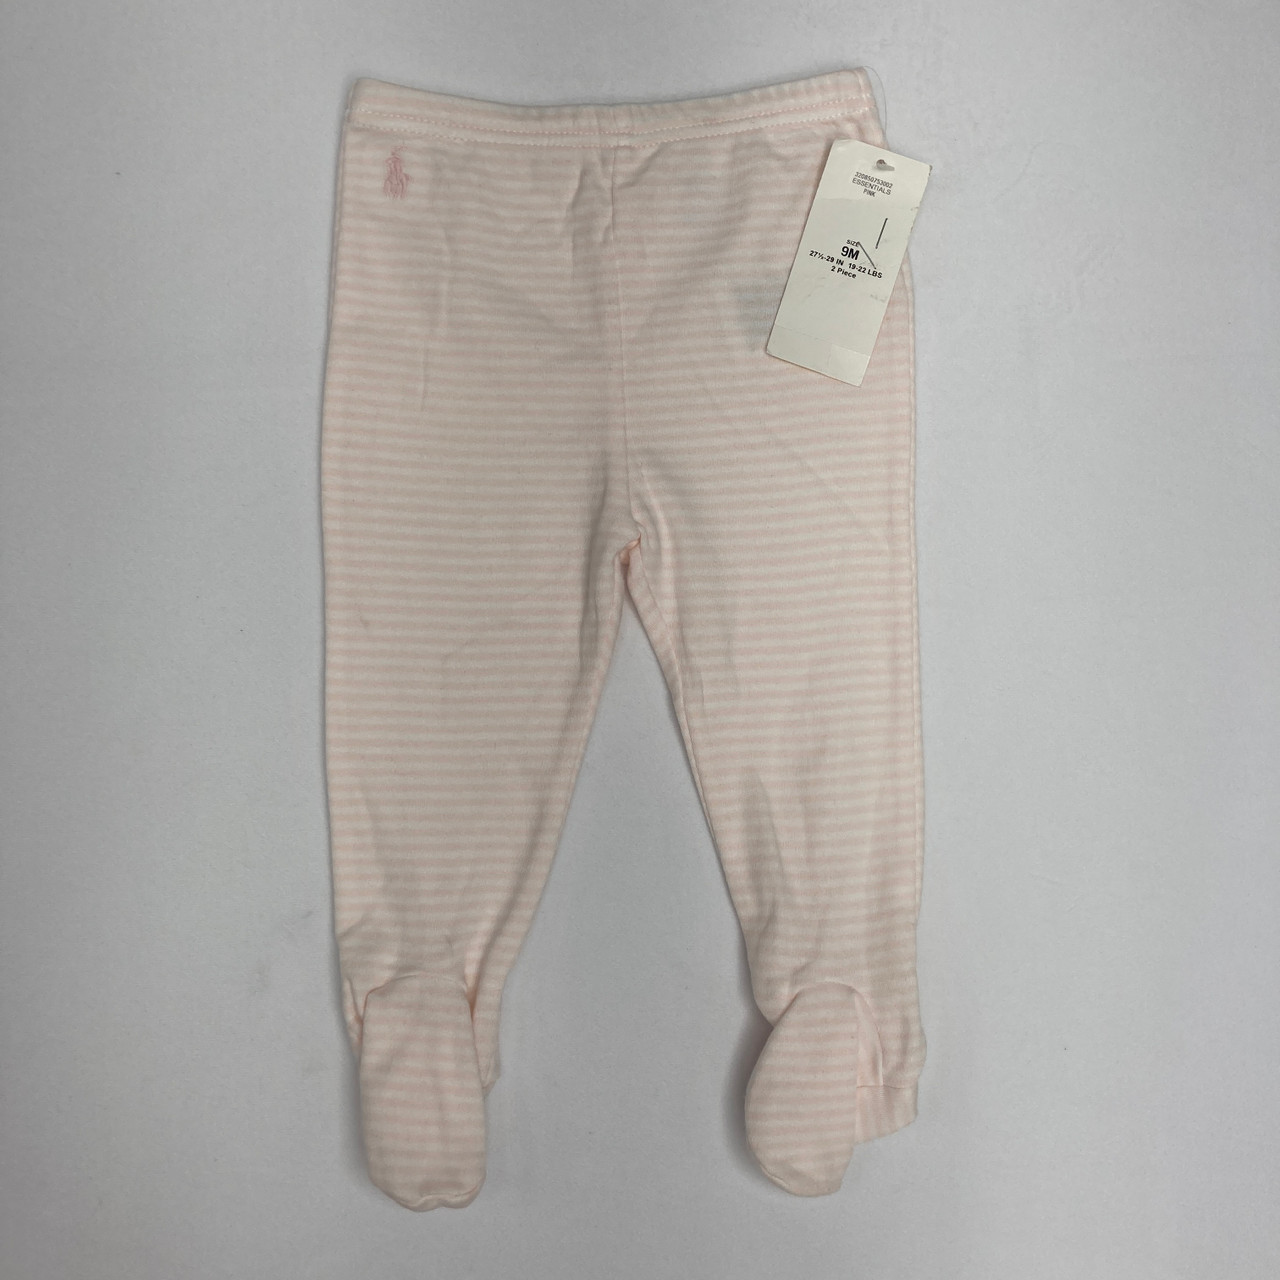 Ralph Lauren Pink Striped Pants 9 mth